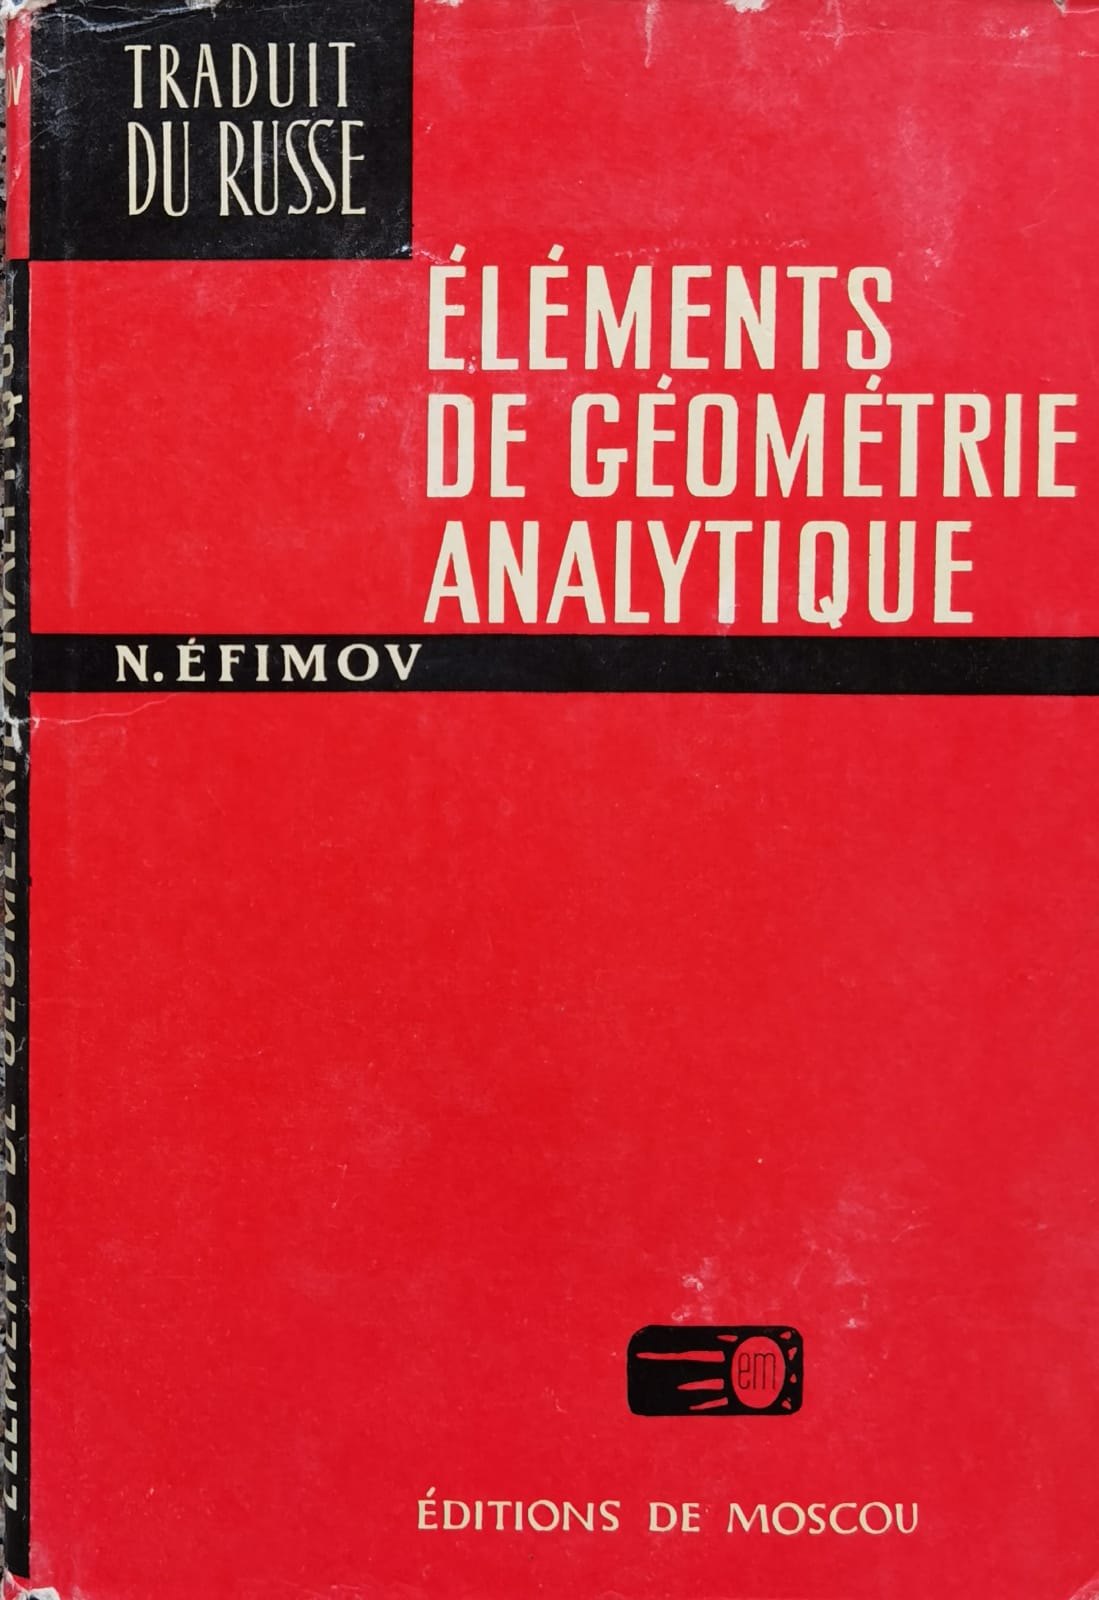 elements de geometrie analytique                                                                     n. efimov                                                                                           